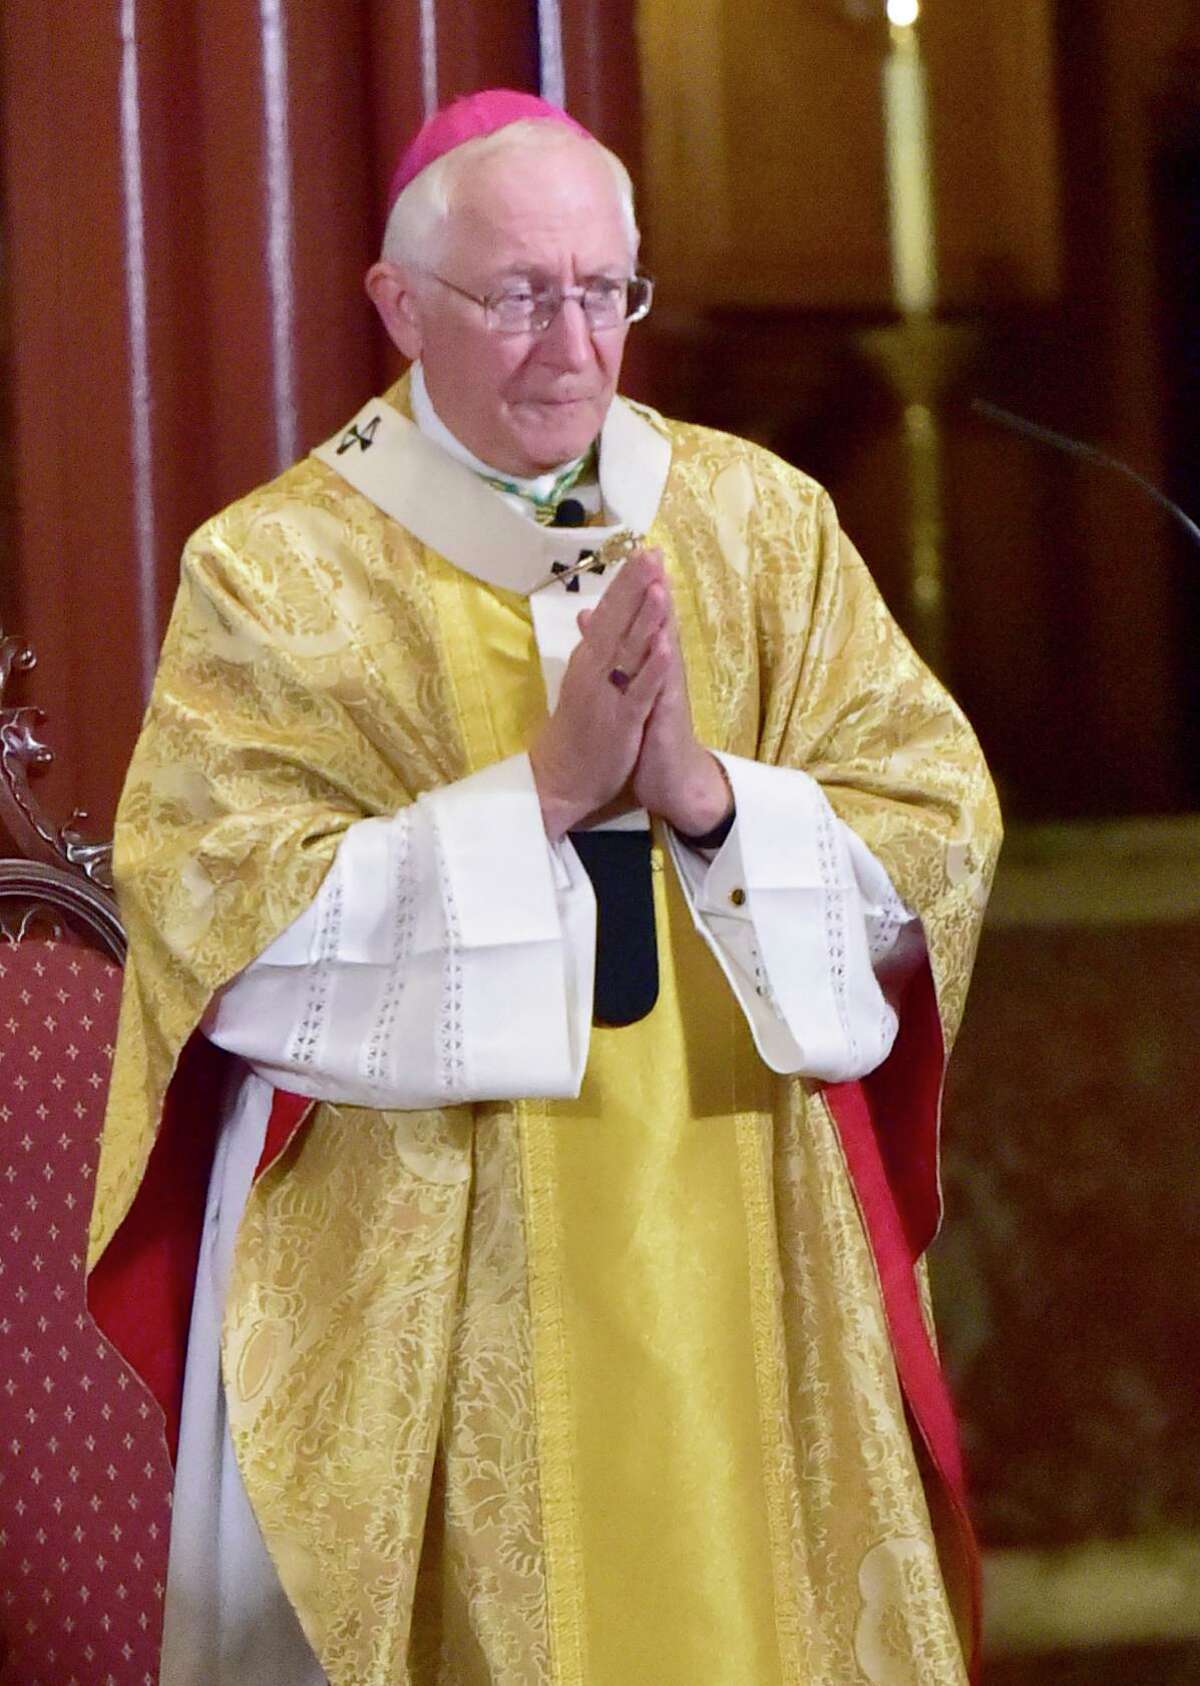 The Most Rev. Leonard P. Blair, Archbishop of Hartford